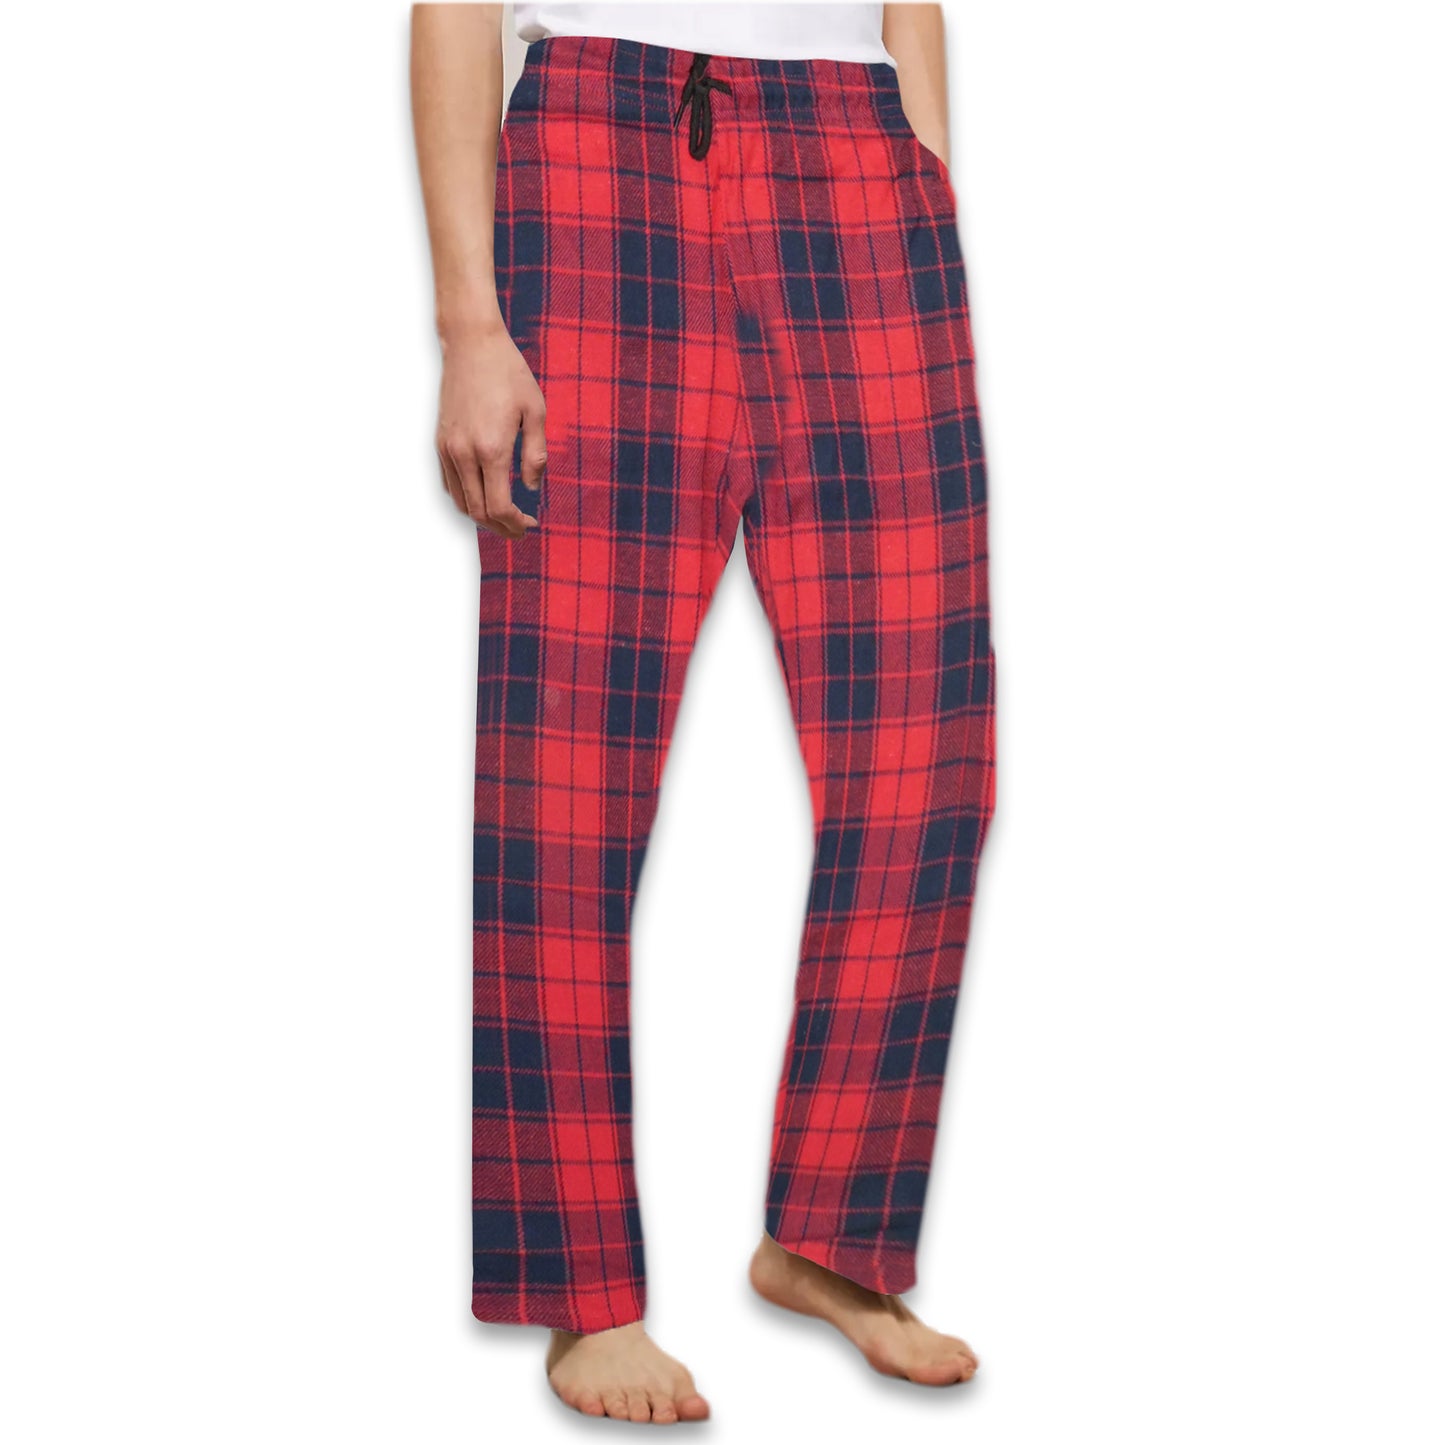 ZIGSTER Men's Check Plaid Pyjama Pants Bottoms Red Polycotton